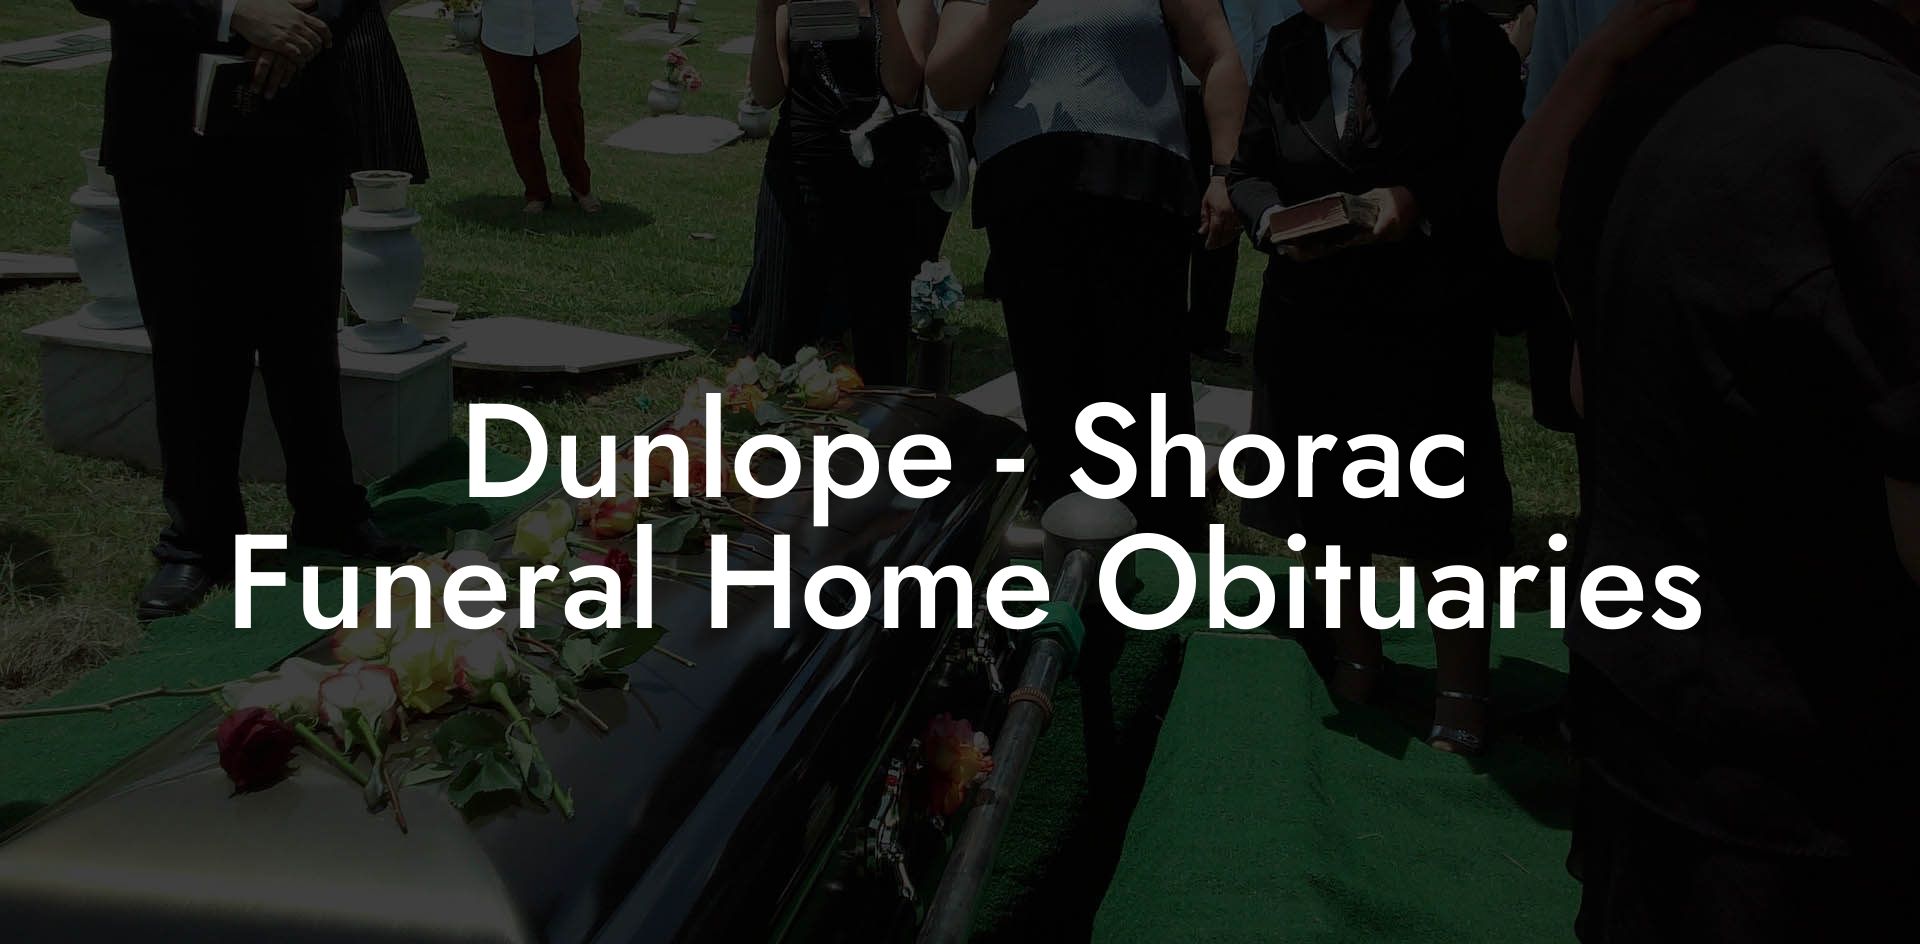 Dunlope - Shorac Funeral Home Obituaries